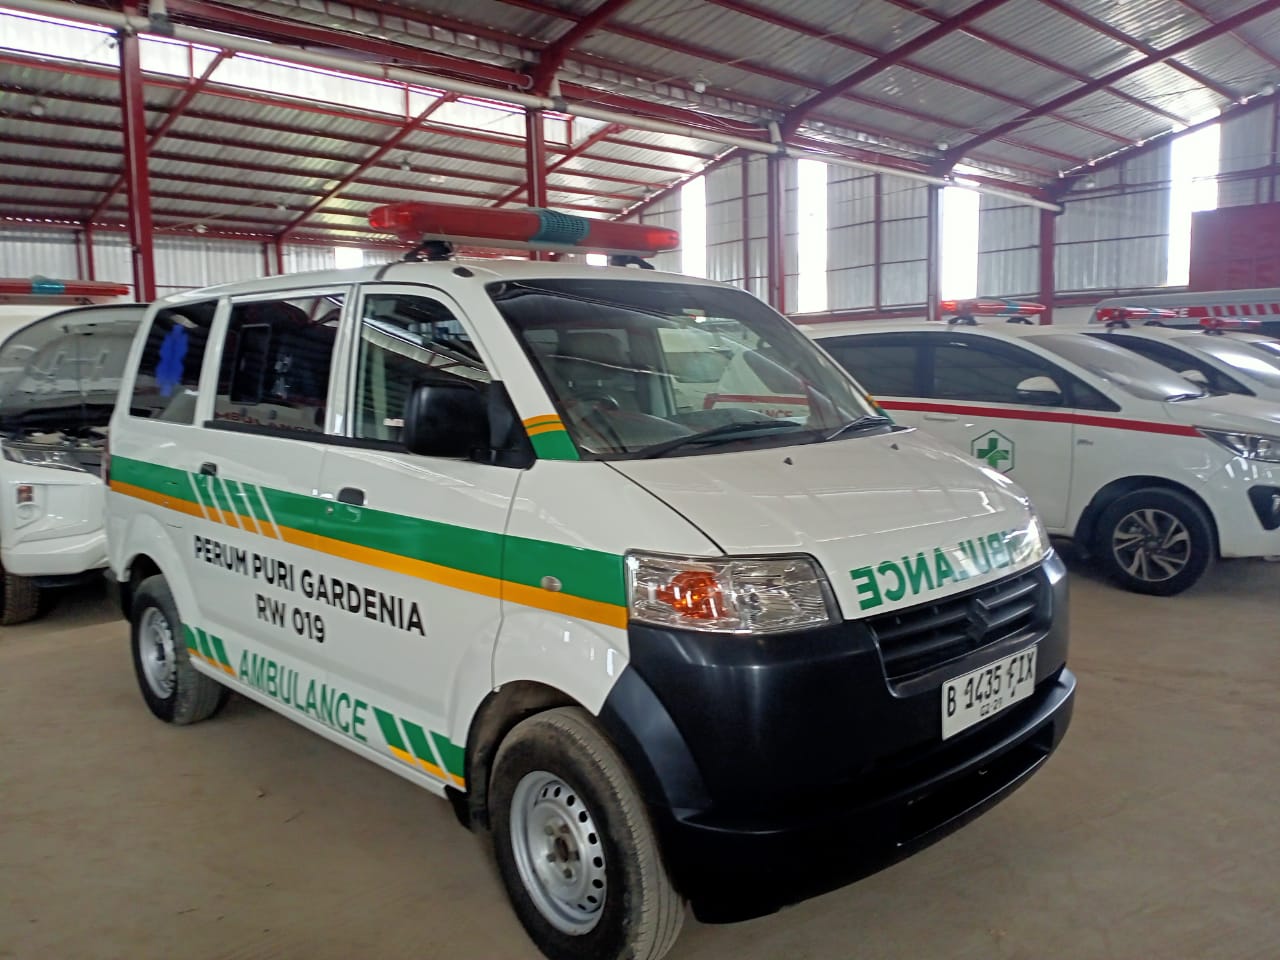 Harga Karoseri Modifikasi Ambulance Berkualitas Pasuruan